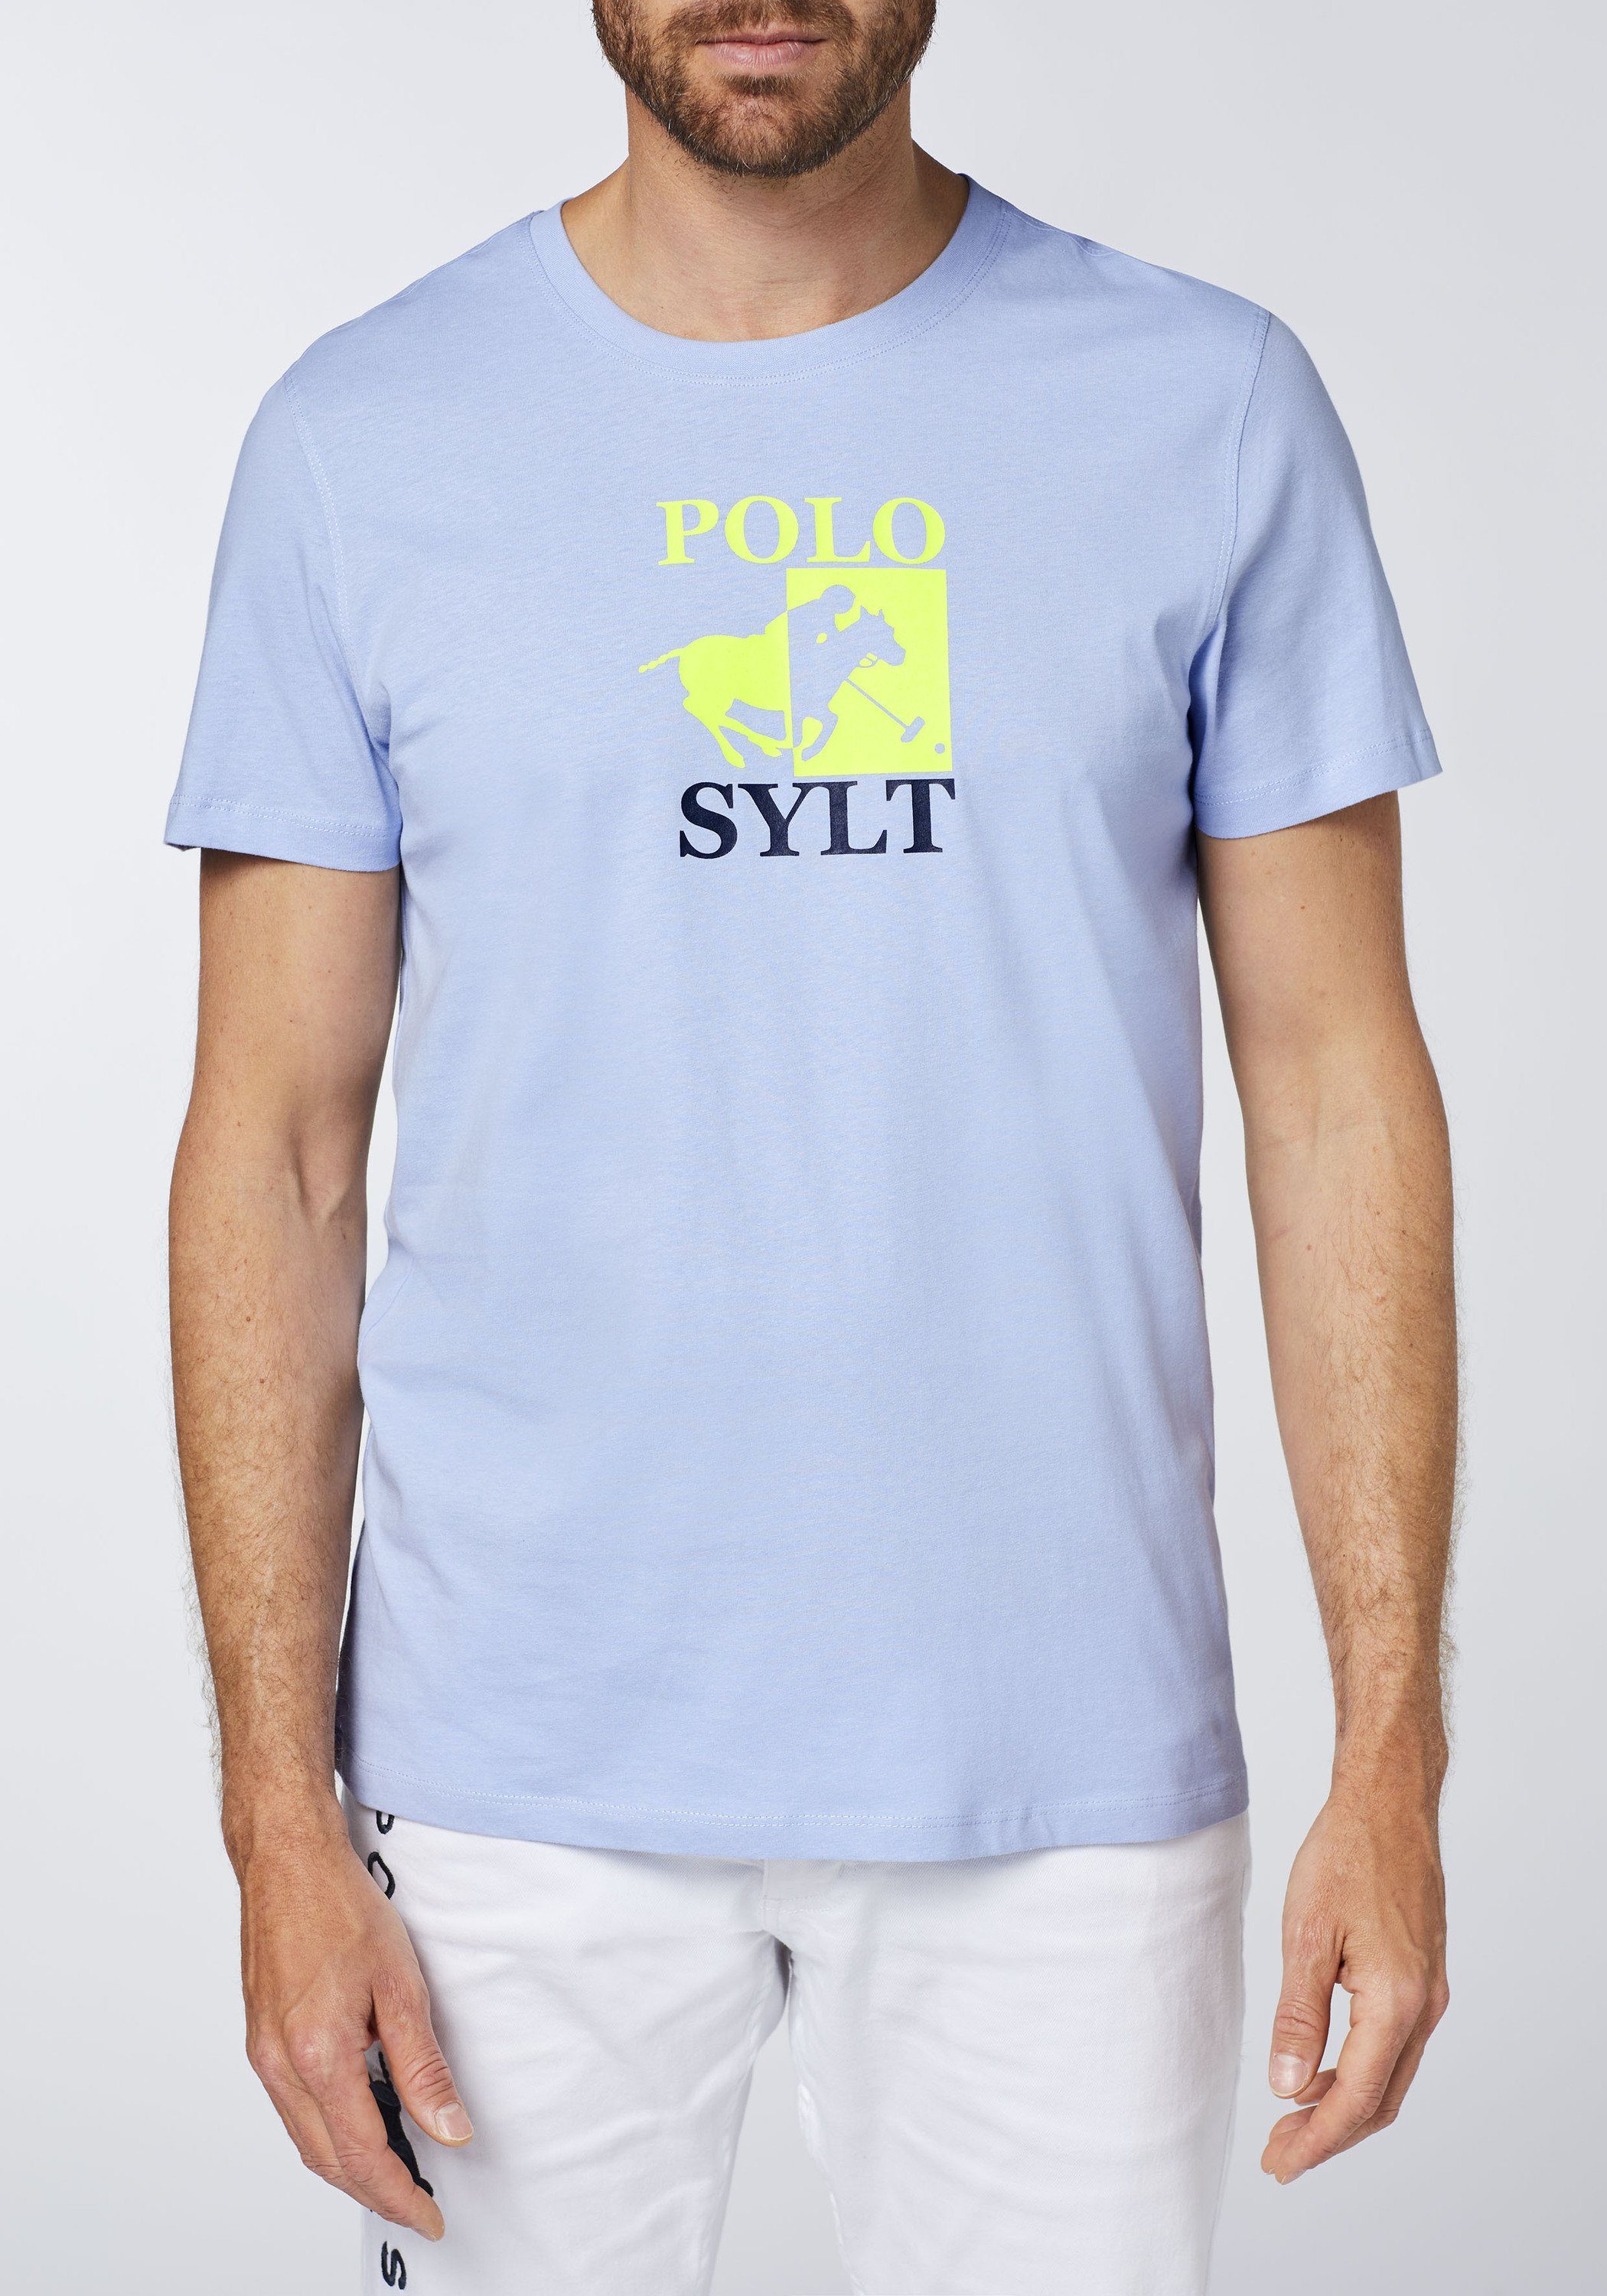 Brunnera 16-3922 Blue Sylt mit Print-Shirt Polo großem Logoprint